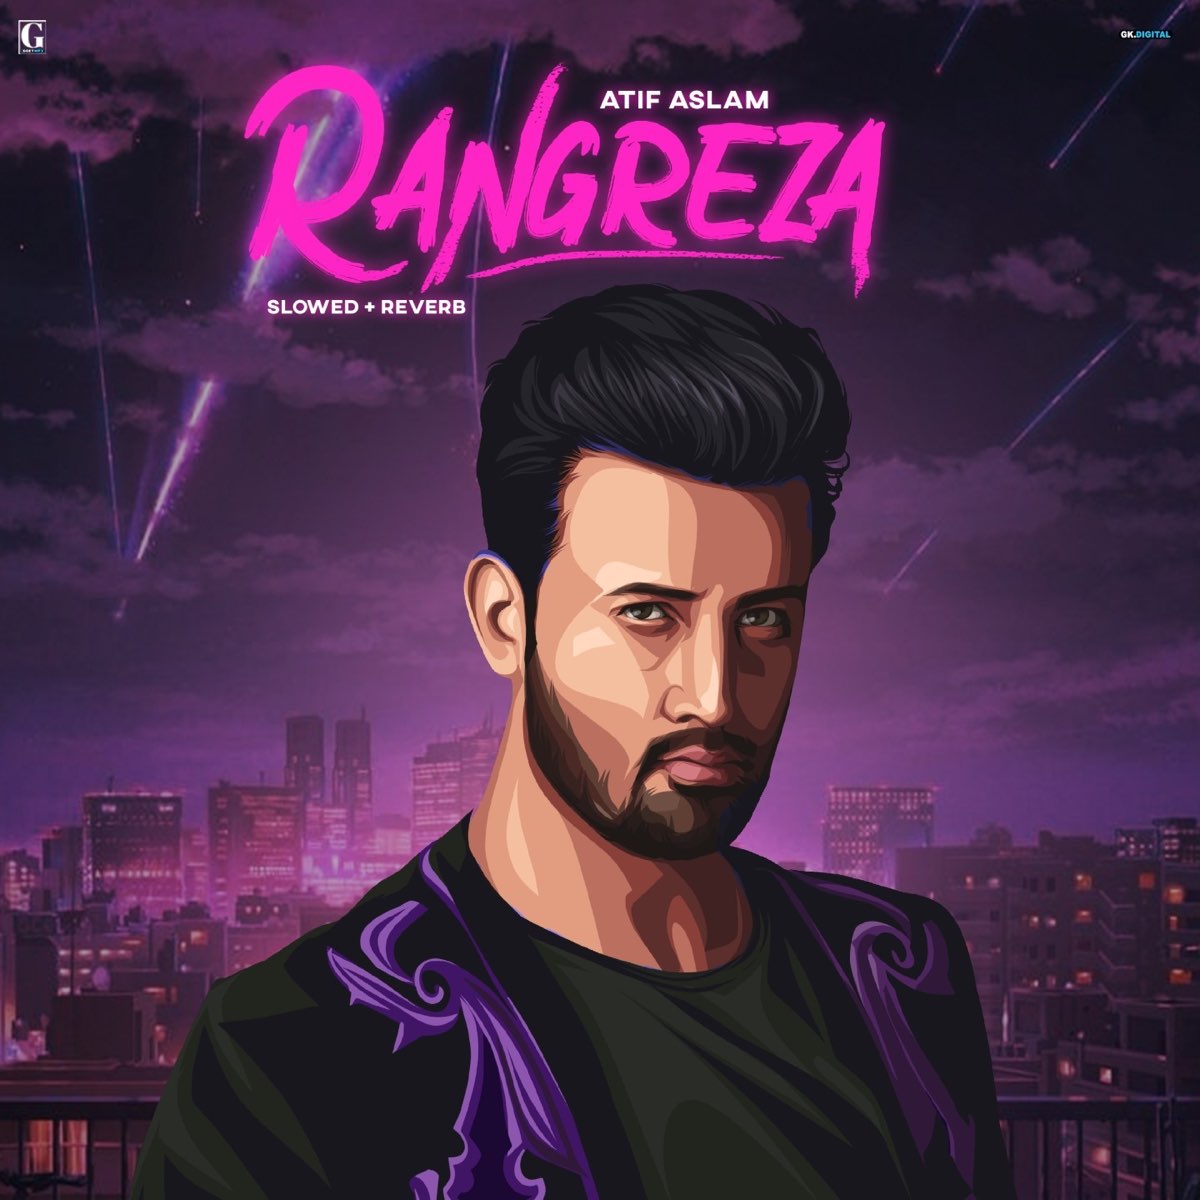 Rangreza Slowed + Reverb - Single by Atif Aslam on Apple Music